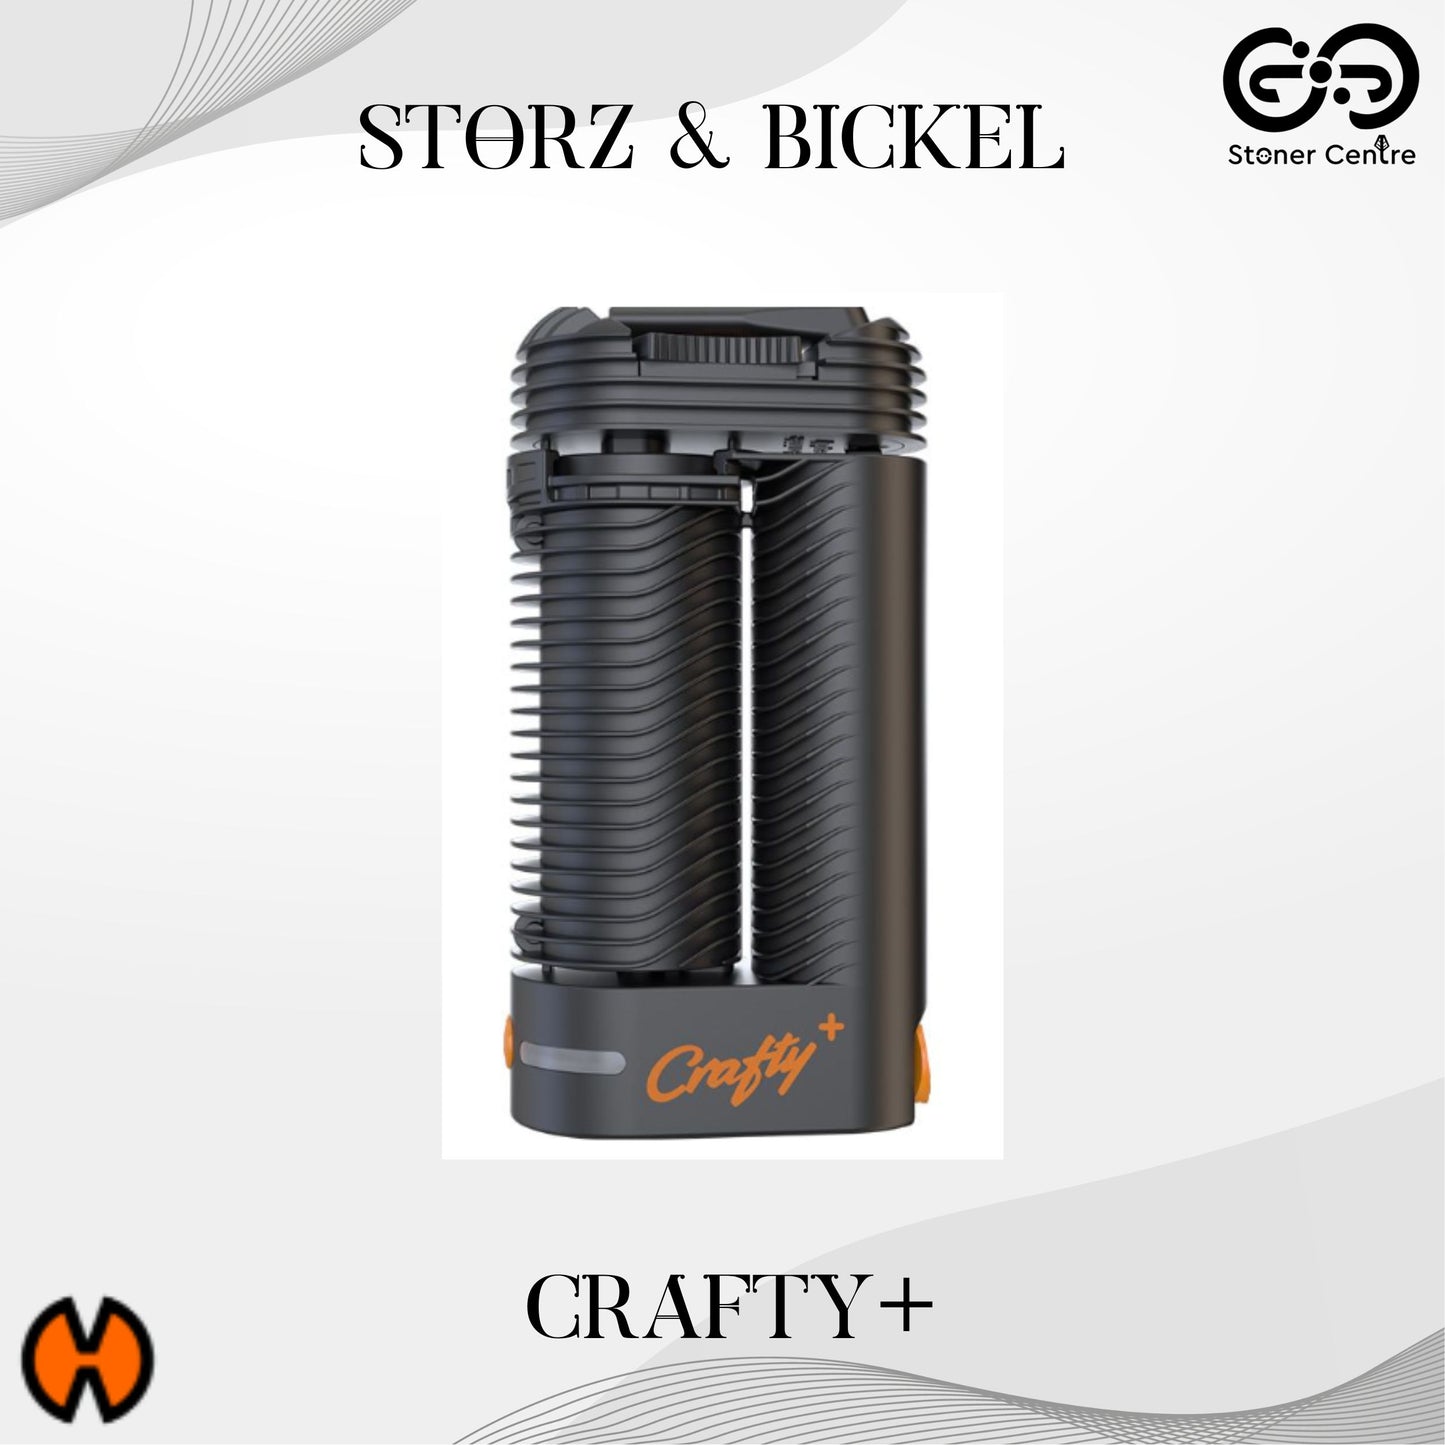 Storz & Bickel | Crafty+